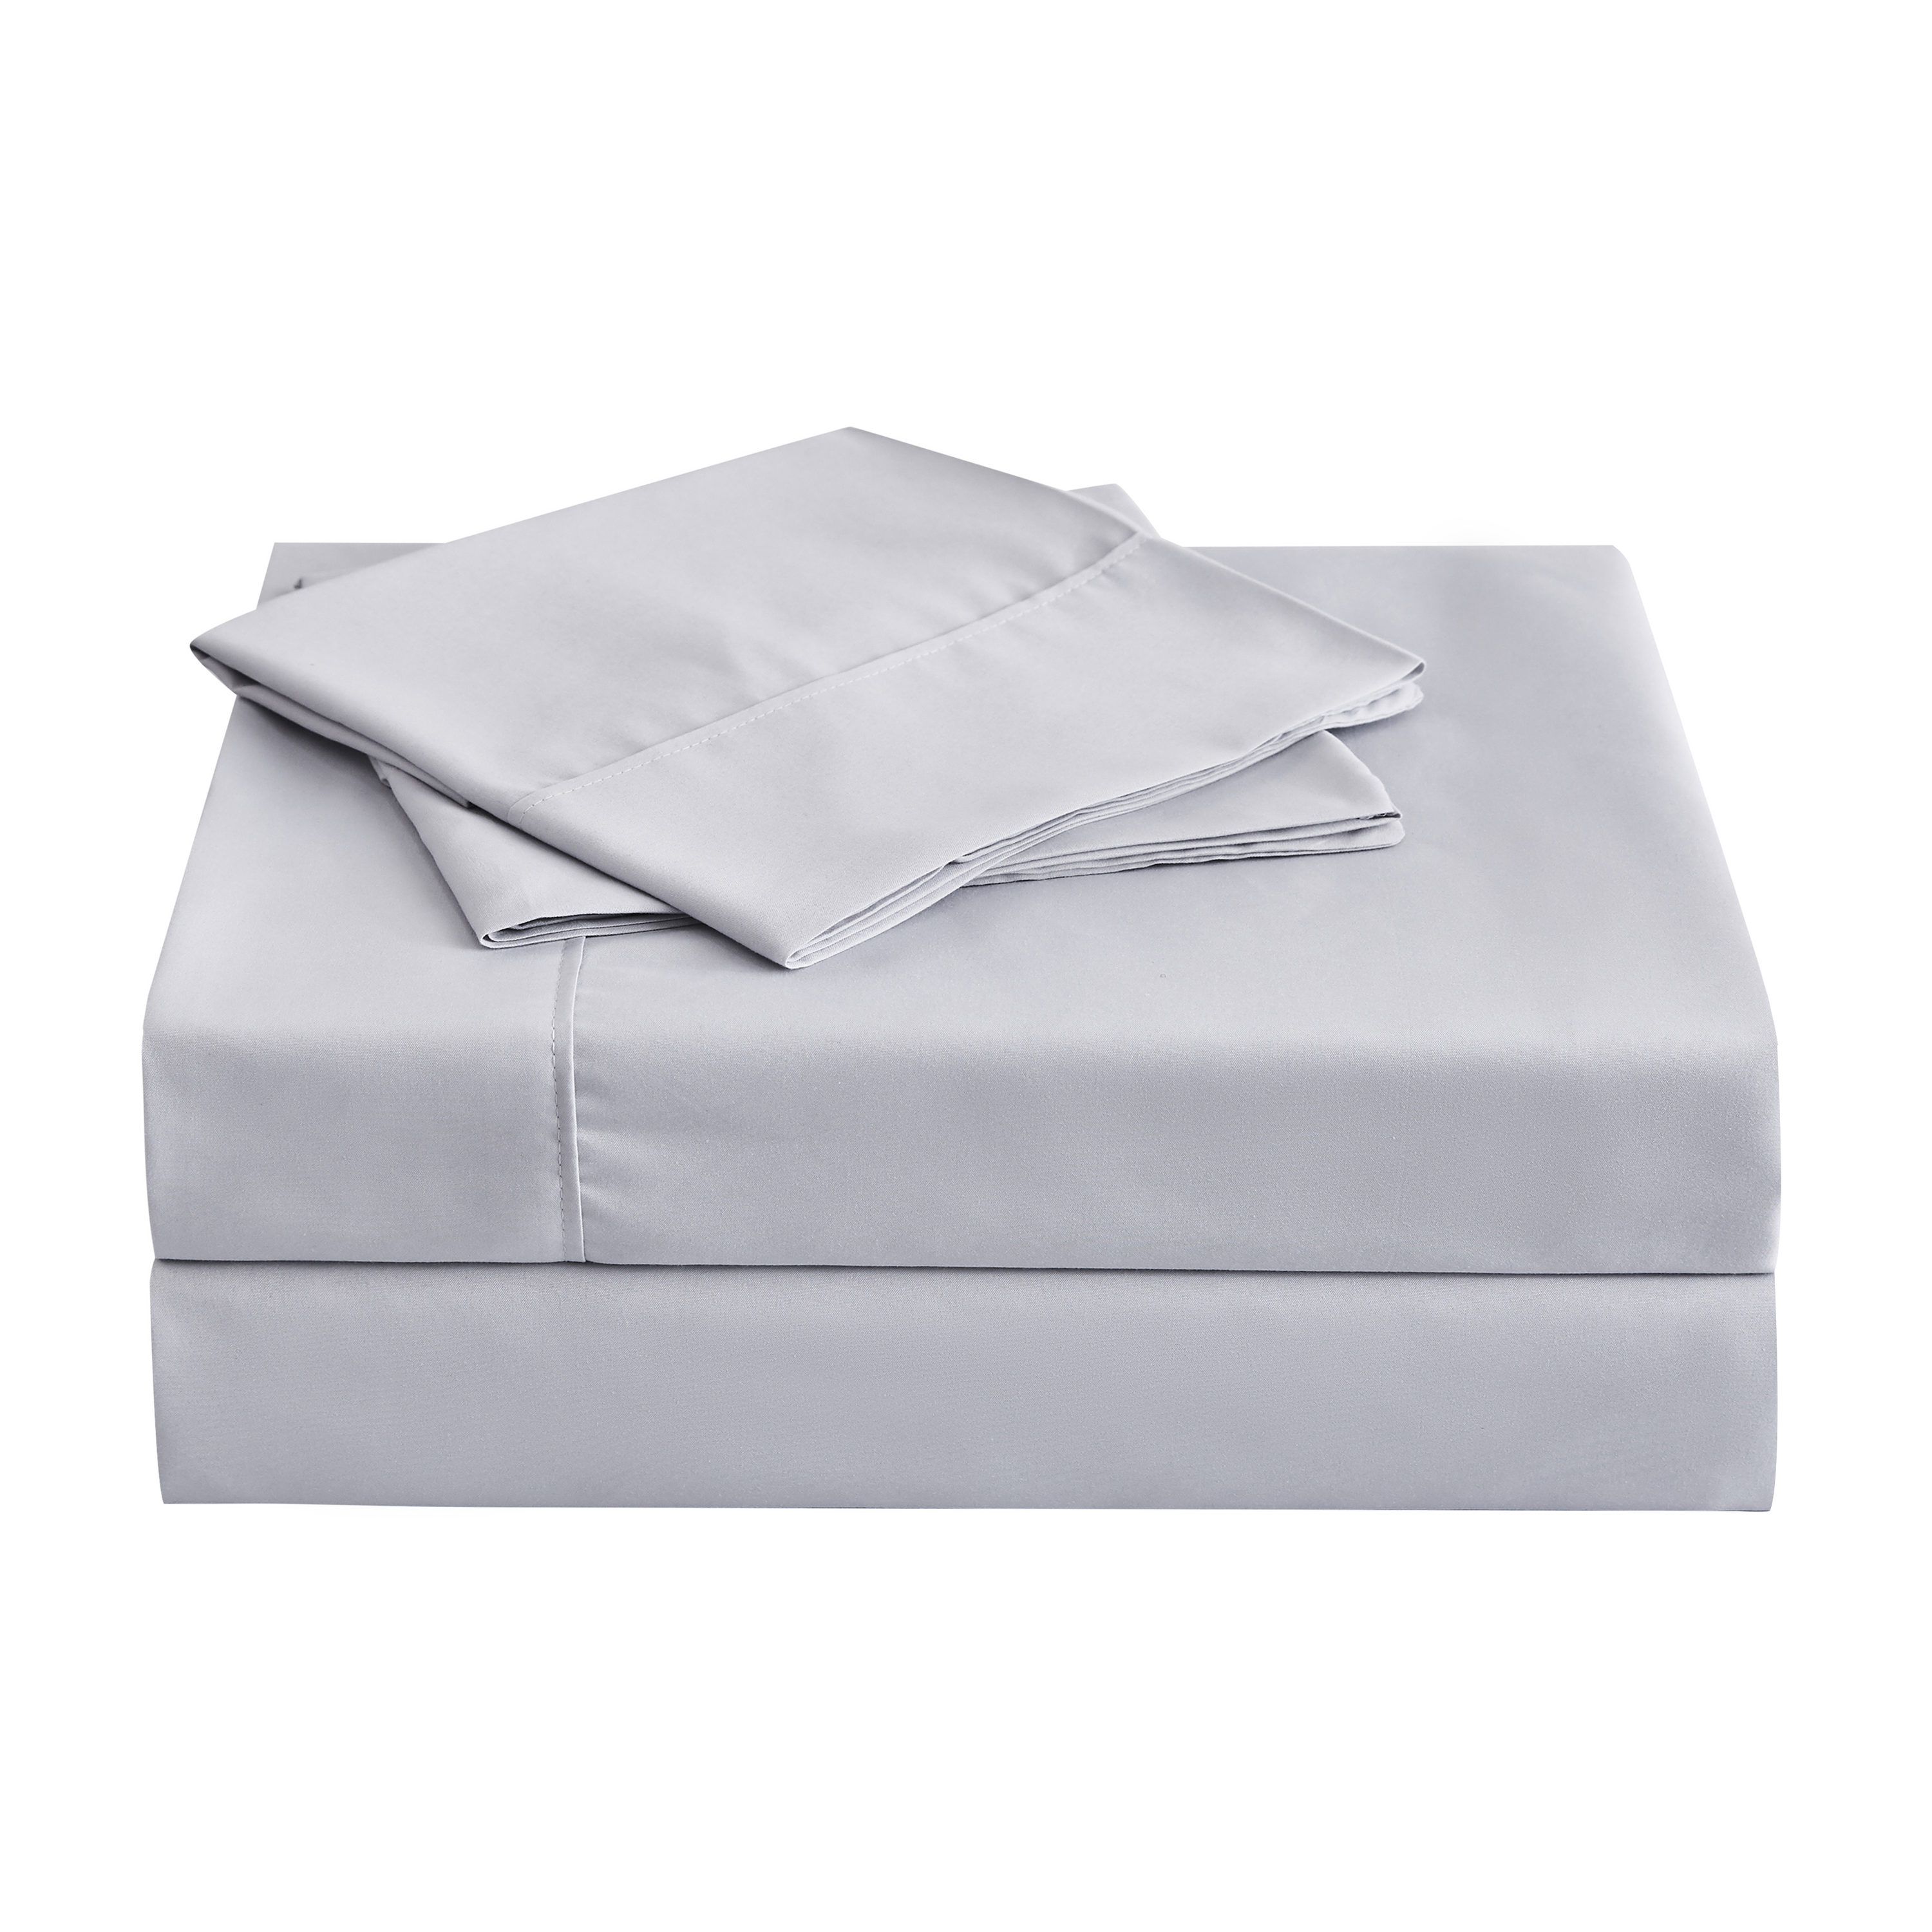  Sheetlock Updated Premium Bed Sheet Strap Set Durable